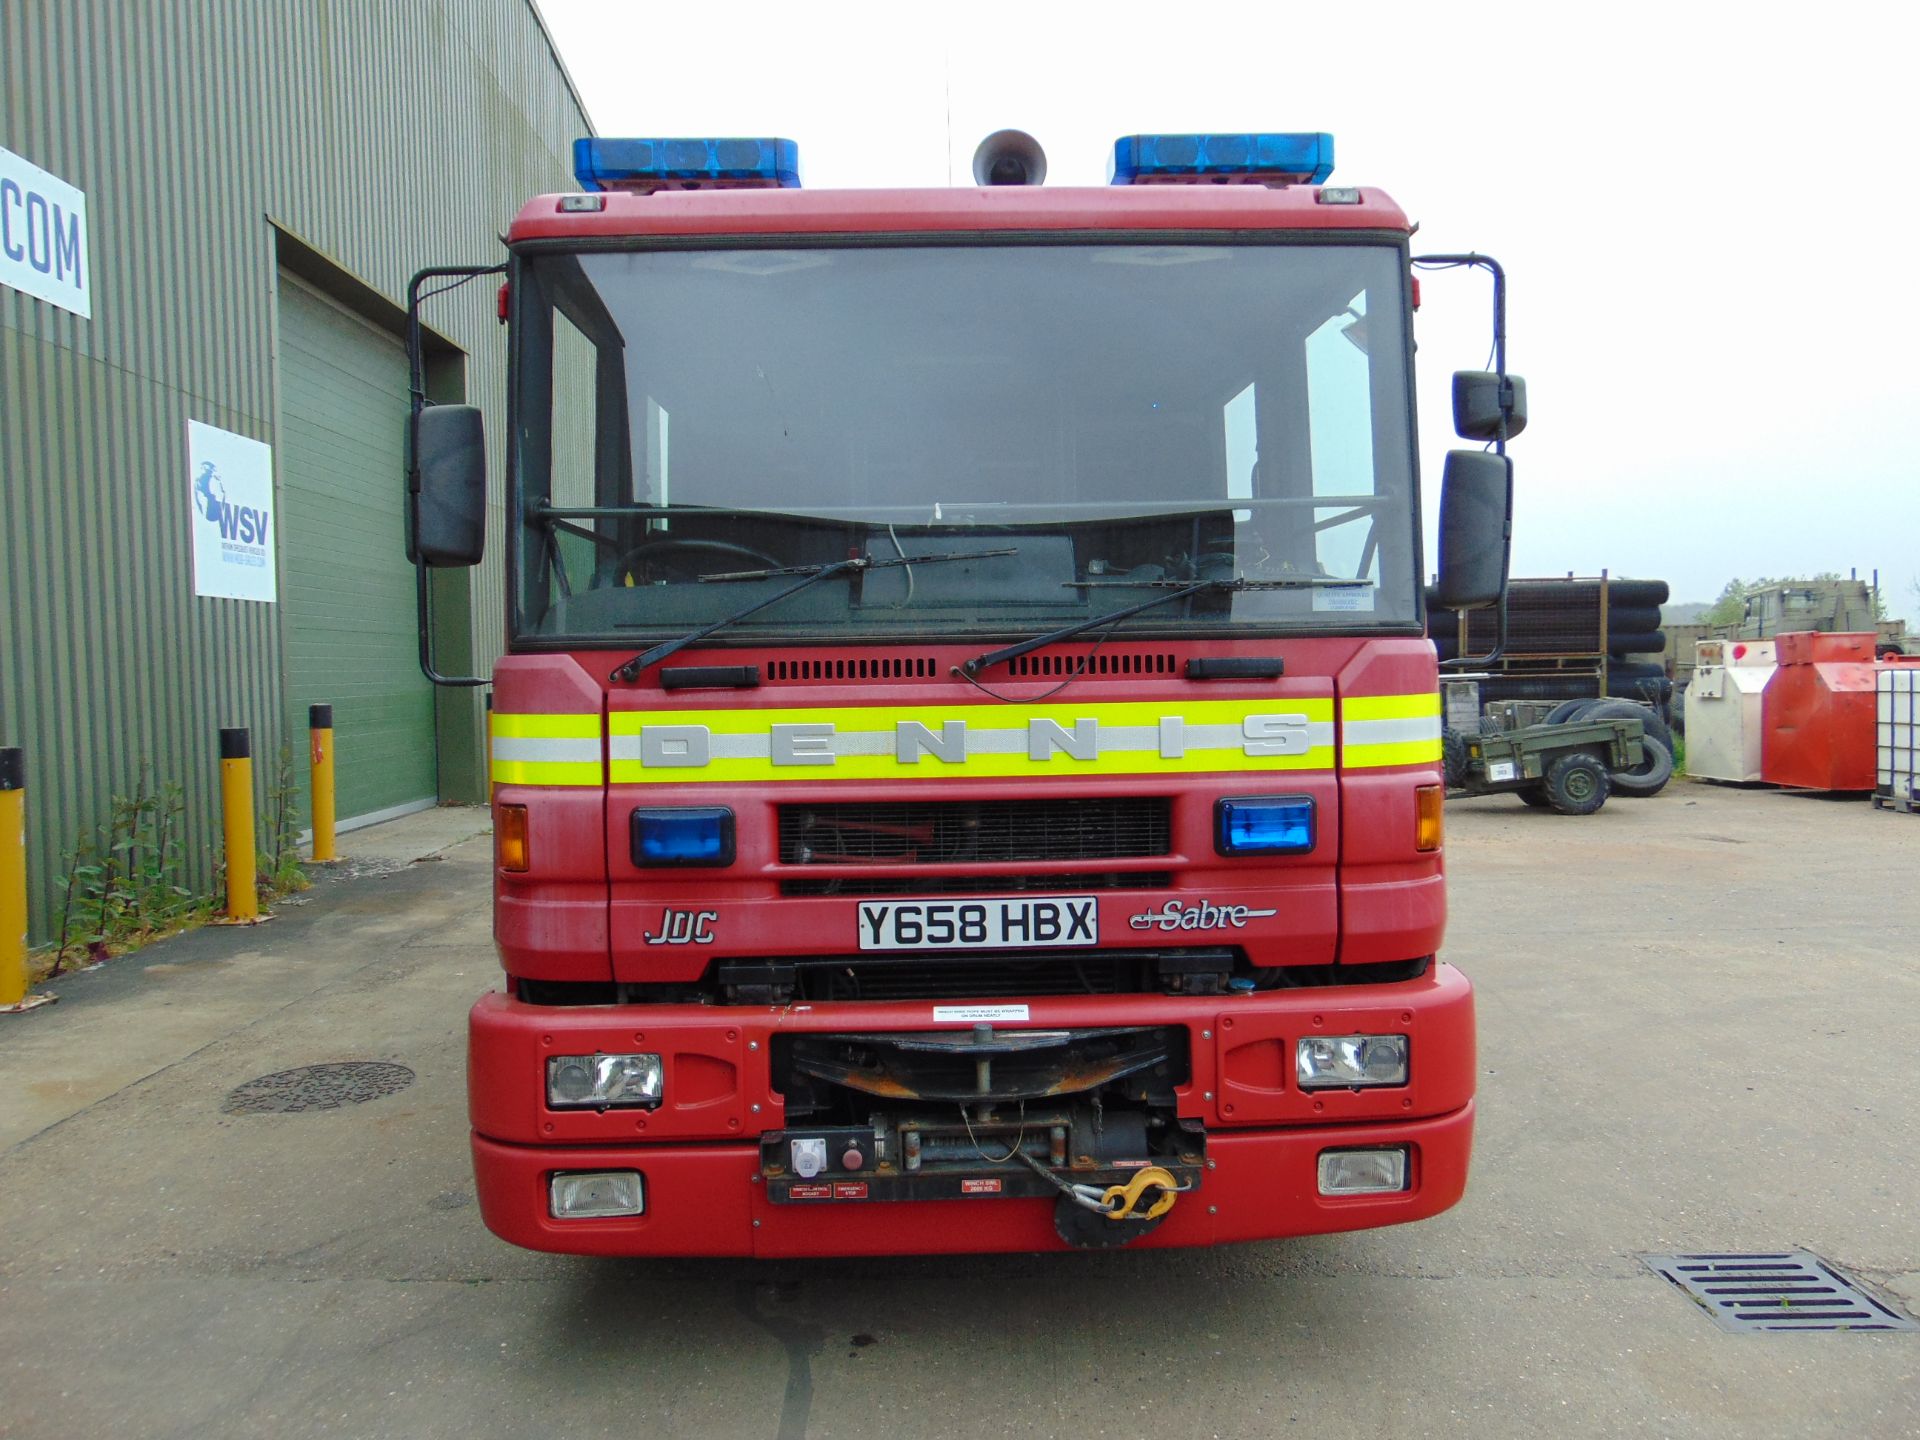 2001 Dennis Sabre Fire Engine - Cummins C260 Diesel Engine - Image 18 of 91